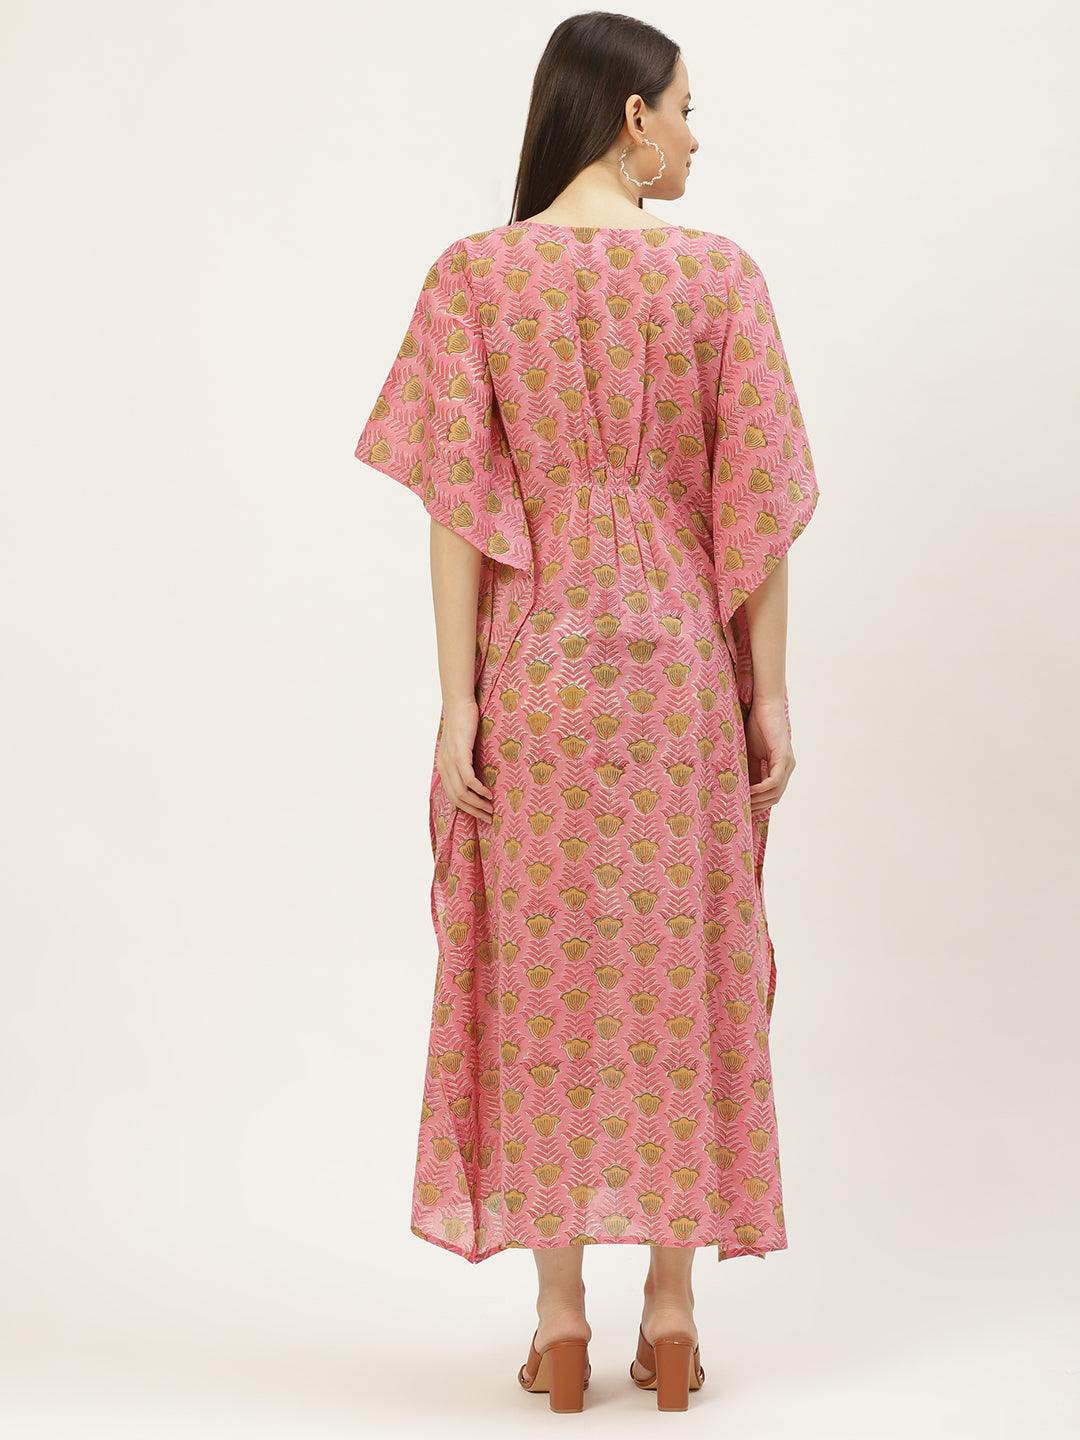 Womens Pink Colored Kaftan Dress Regular Kaftan from Maaesa Creations -MAKF45 - moher.in